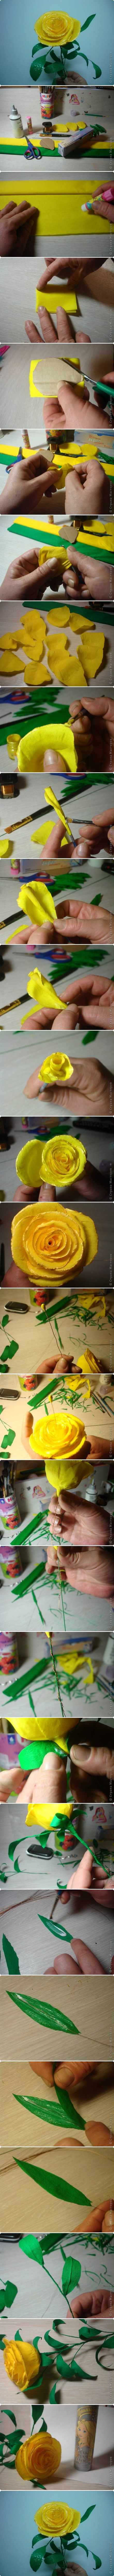 DIY-Handmade-Roses